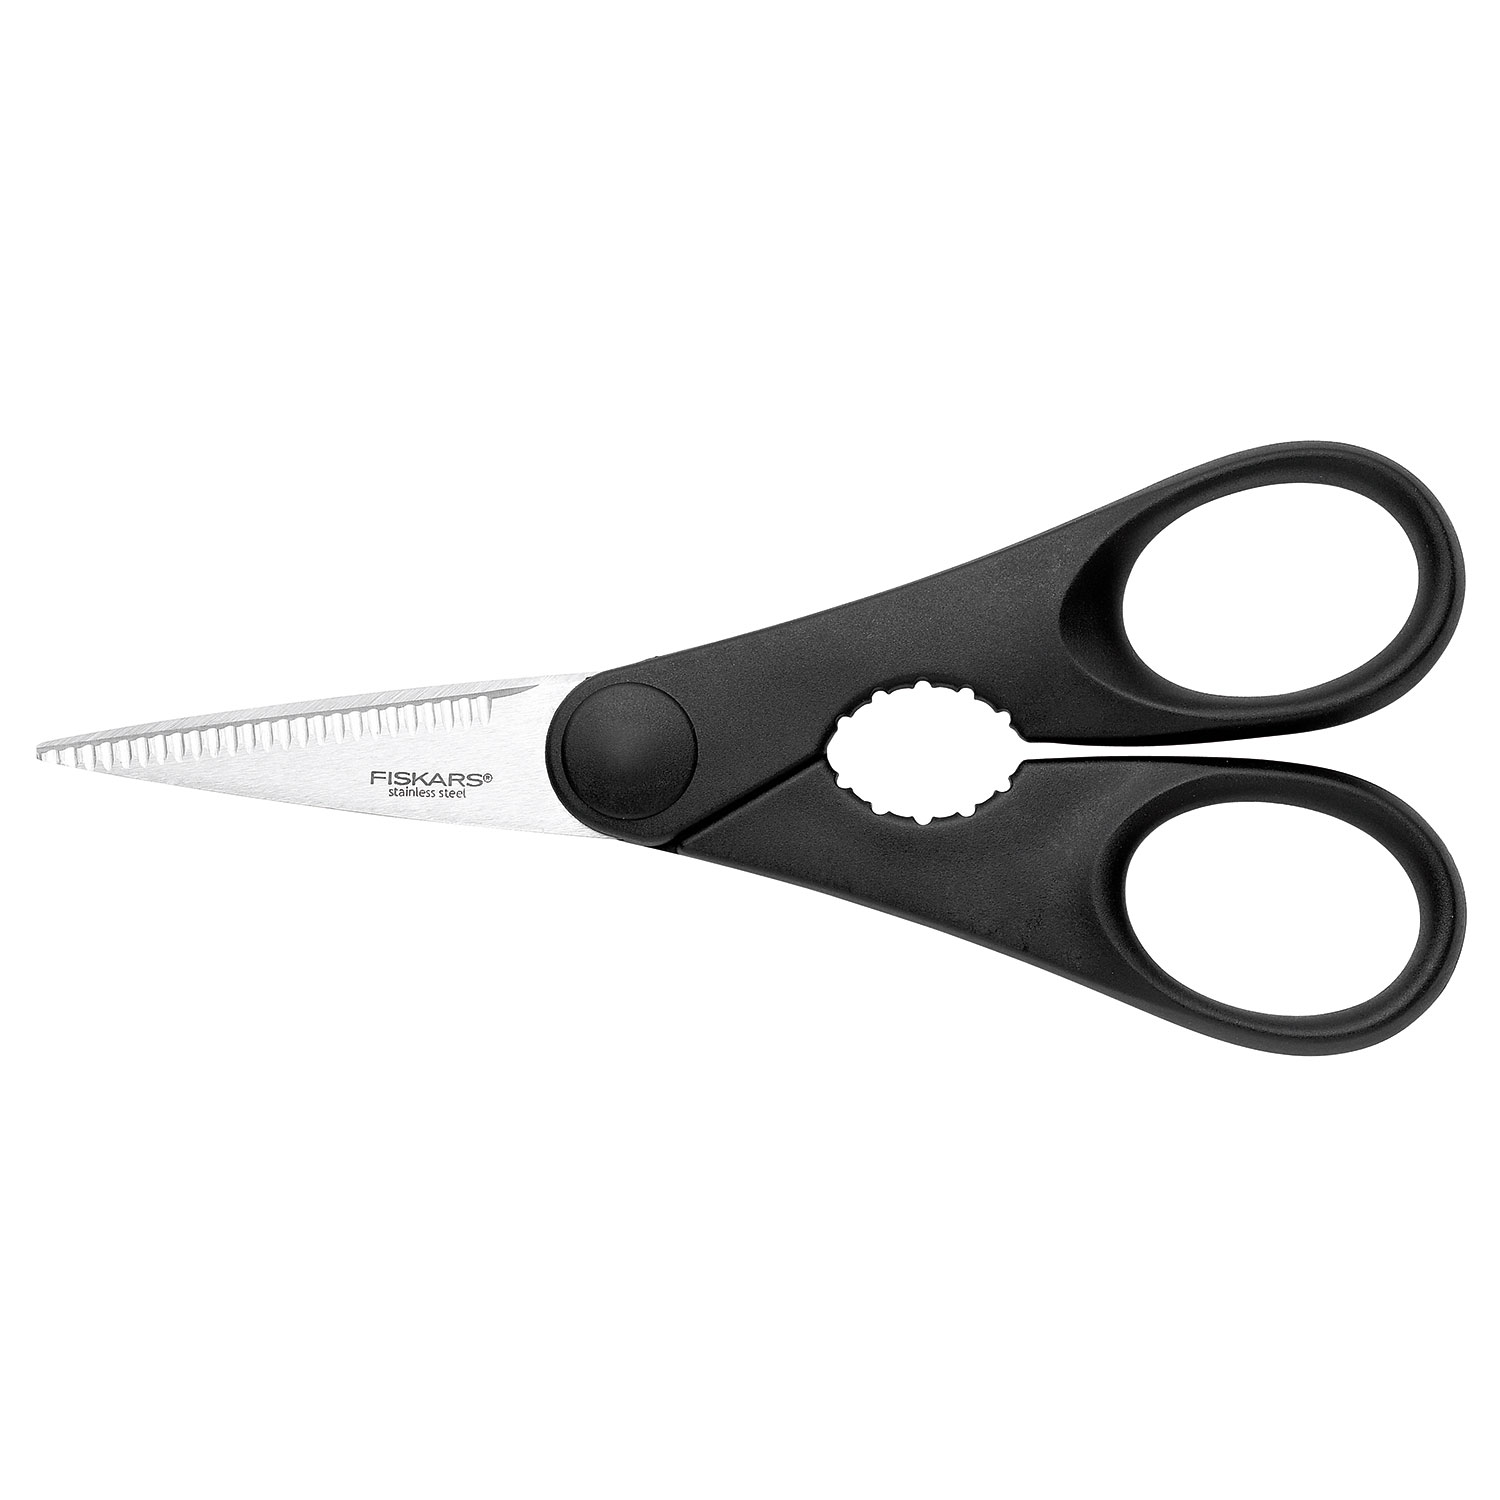 https://api-prod.royaldesign.se/api/products/image/11/fiskars-essential-kitchen-scissors-20-cm-0